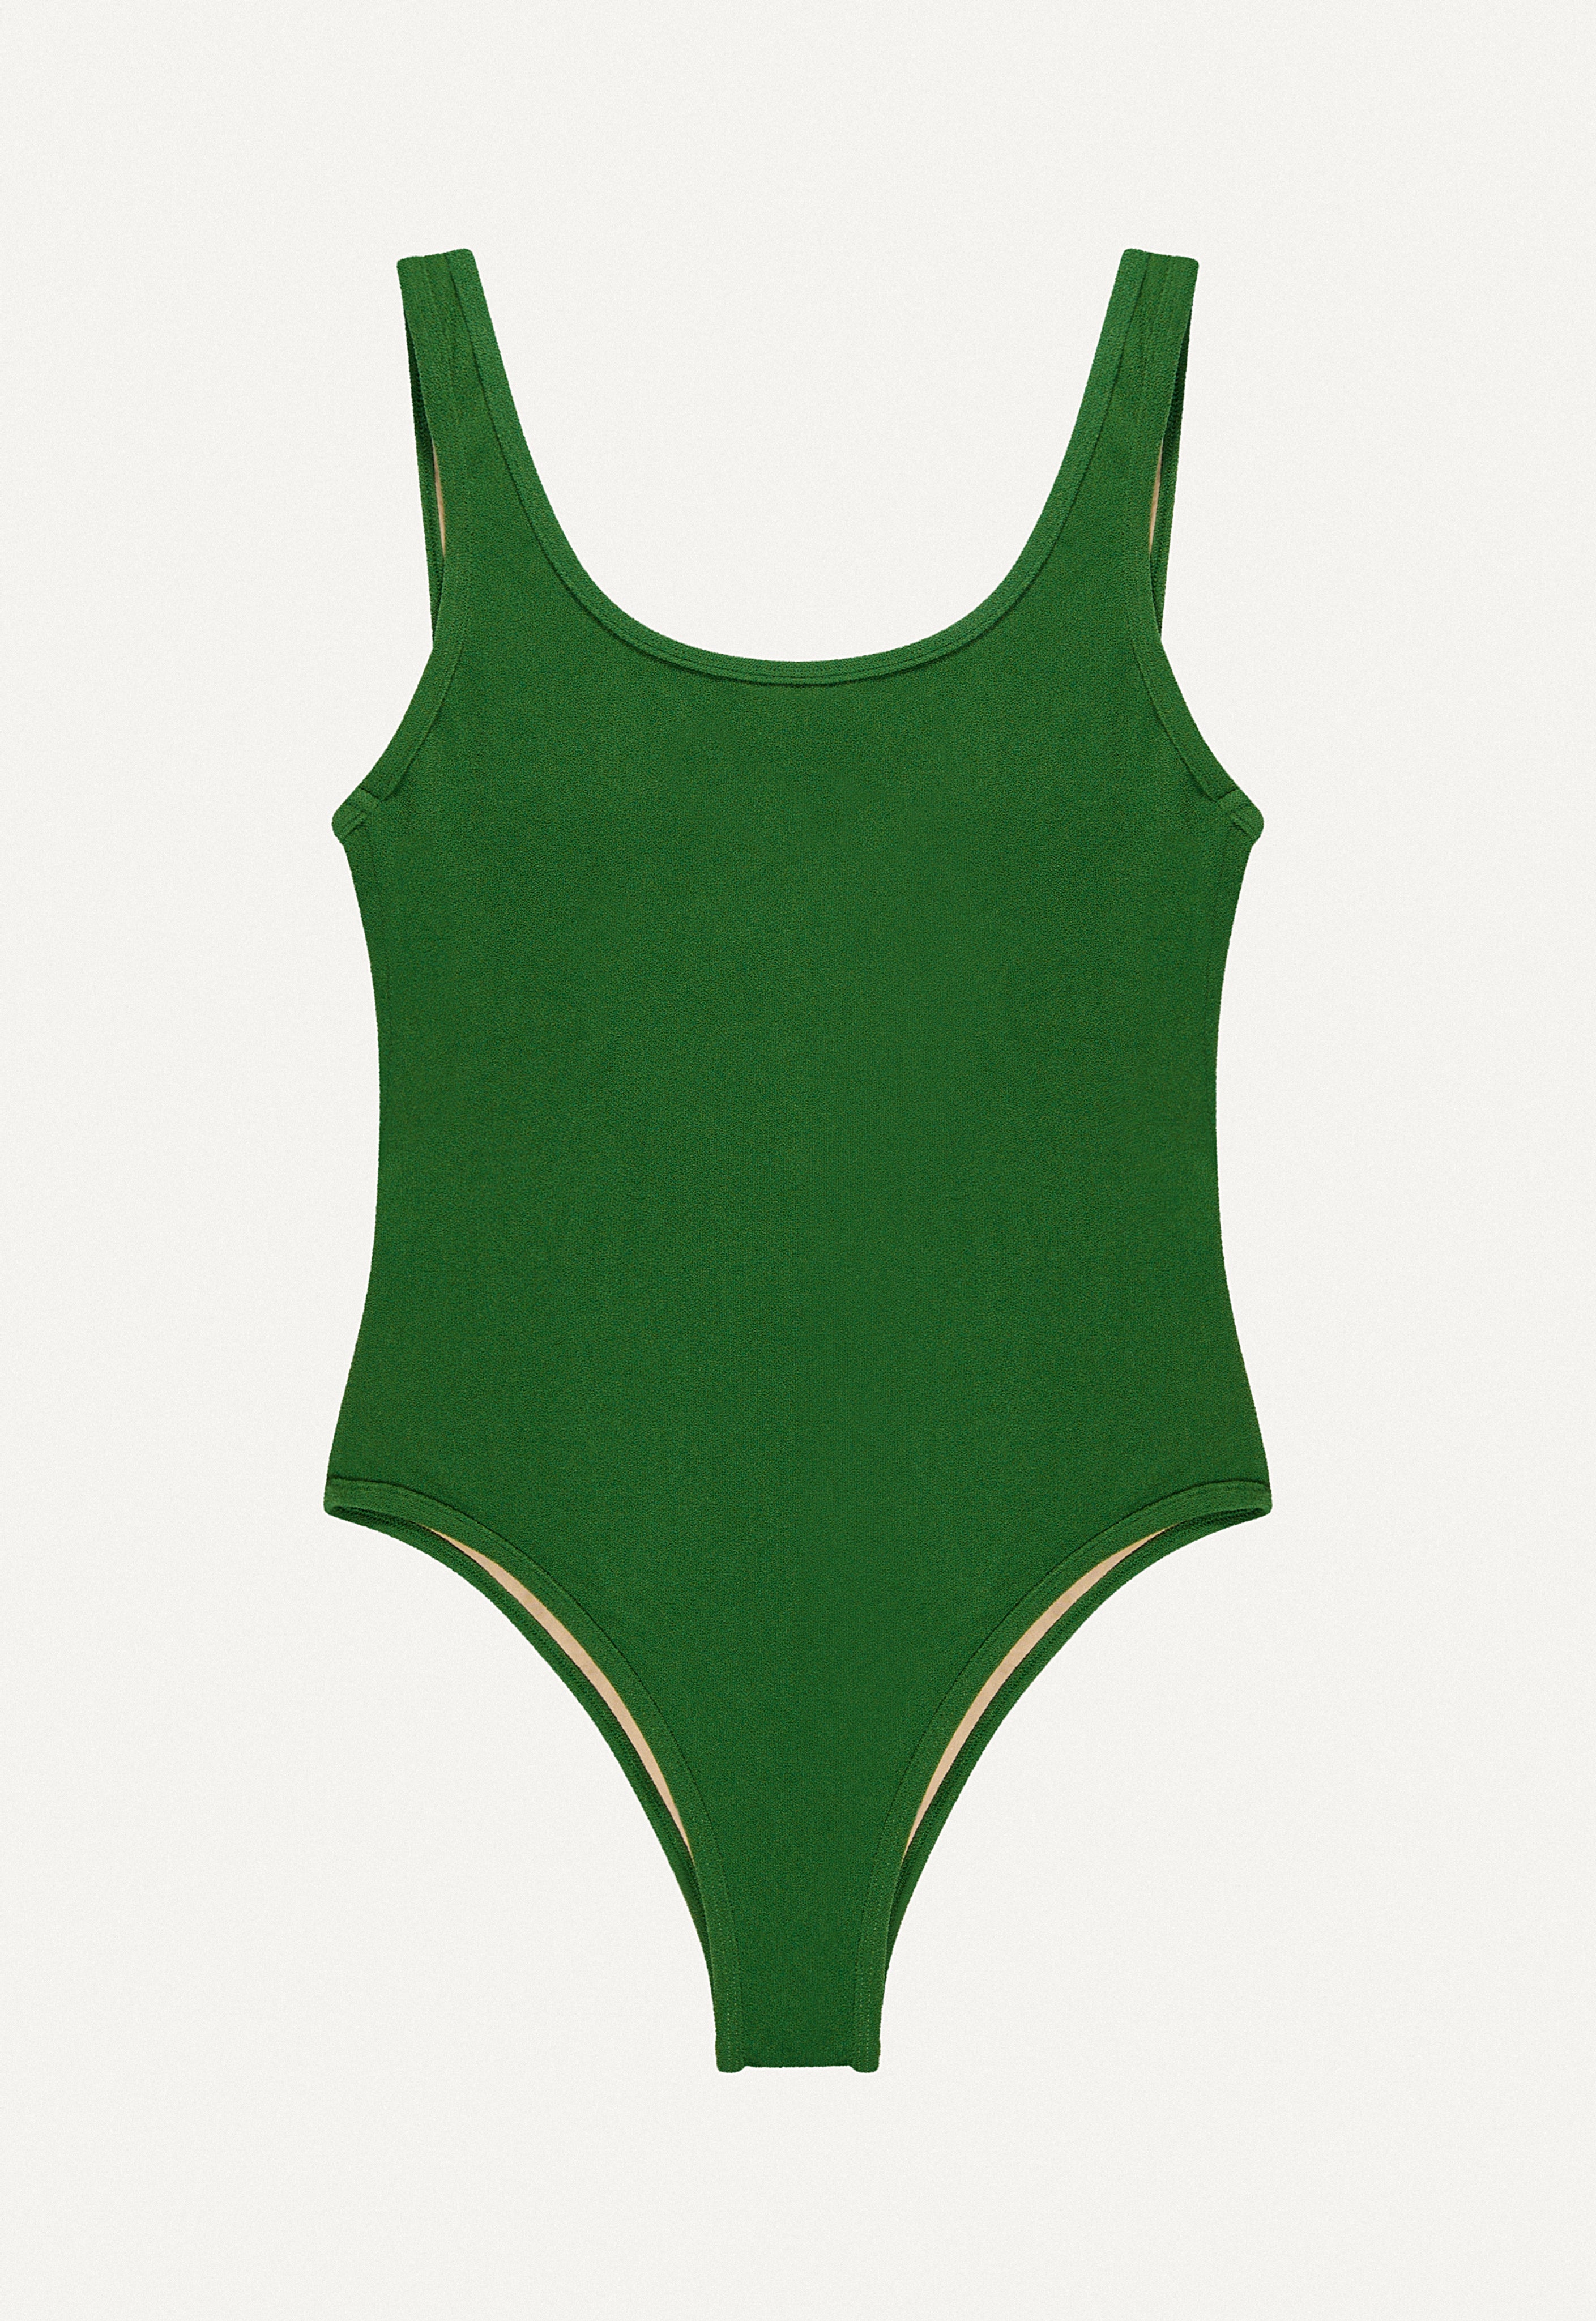 Oy-badeanzug-A23-swimwear-Zephyr-dunkelgruen-frottee-front.jpg